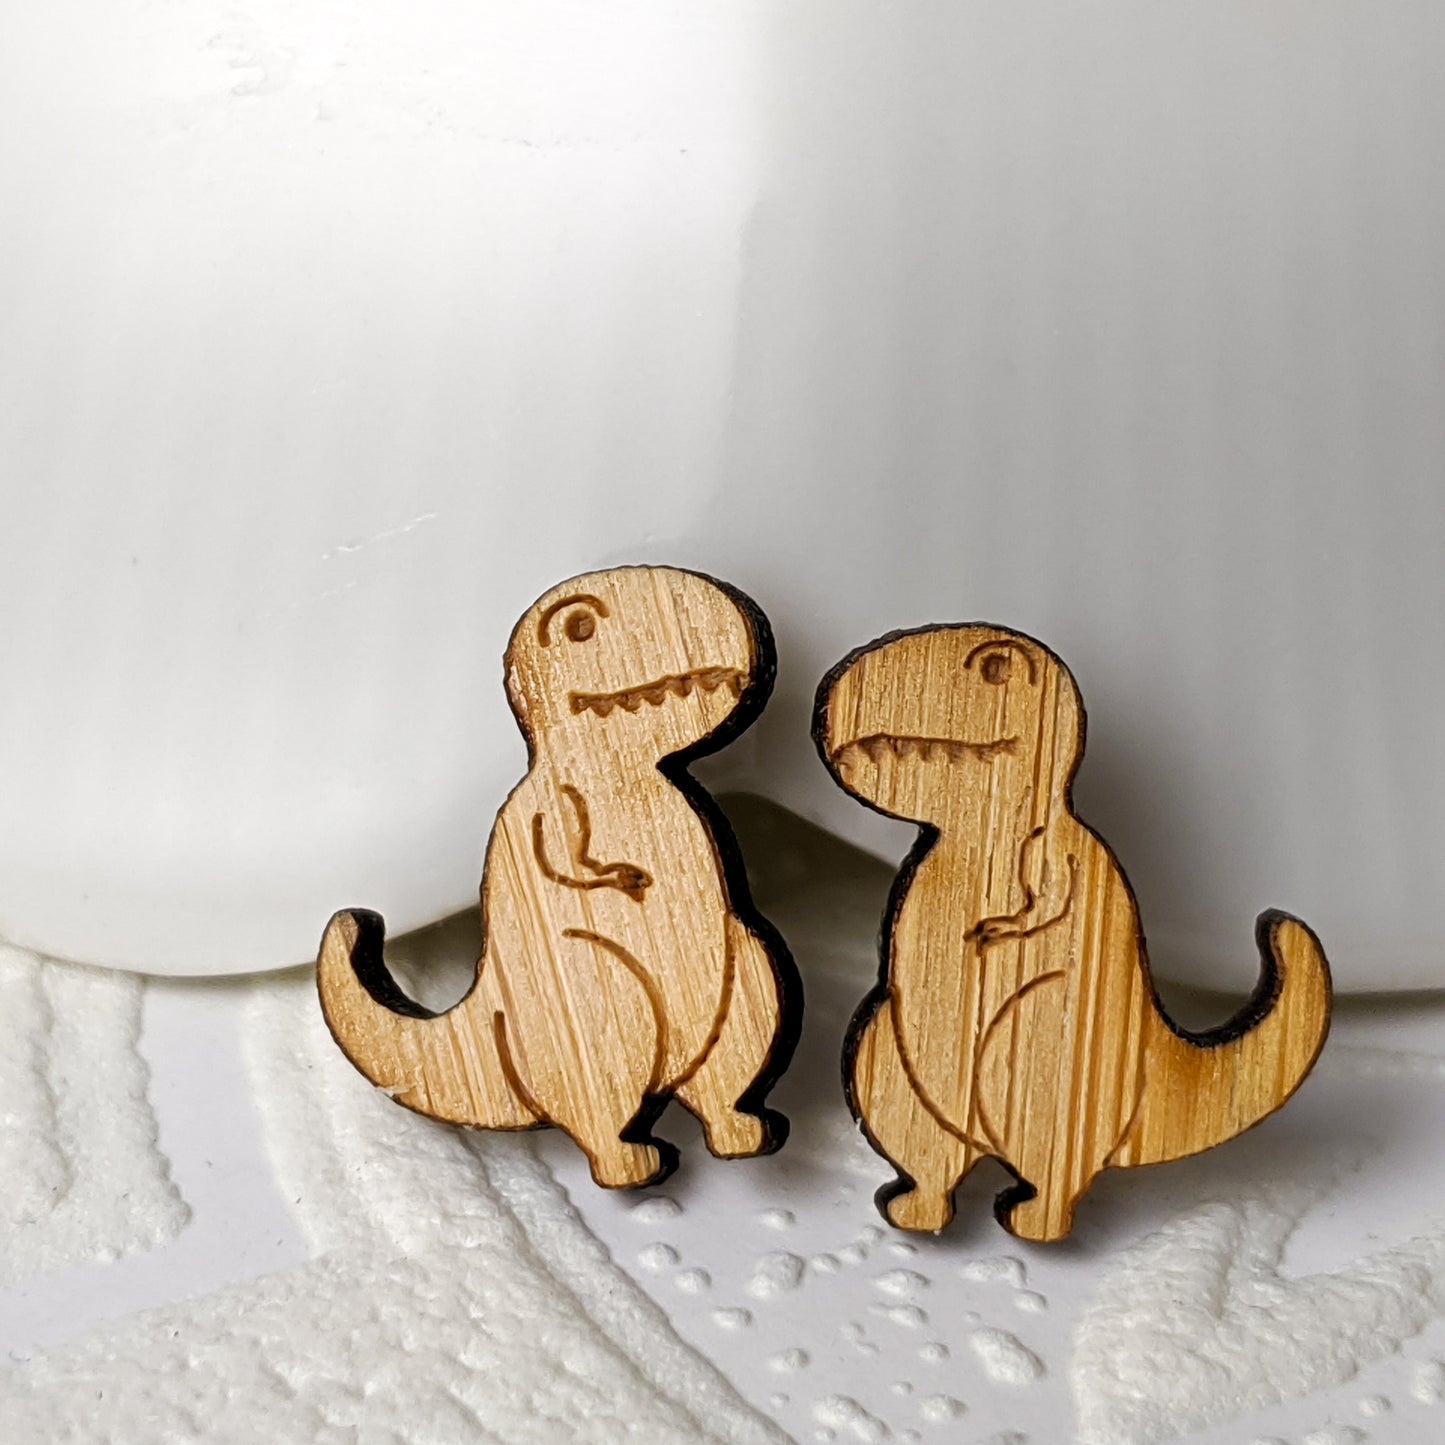 T-Rex Dino Stud Earrings, Bamboo